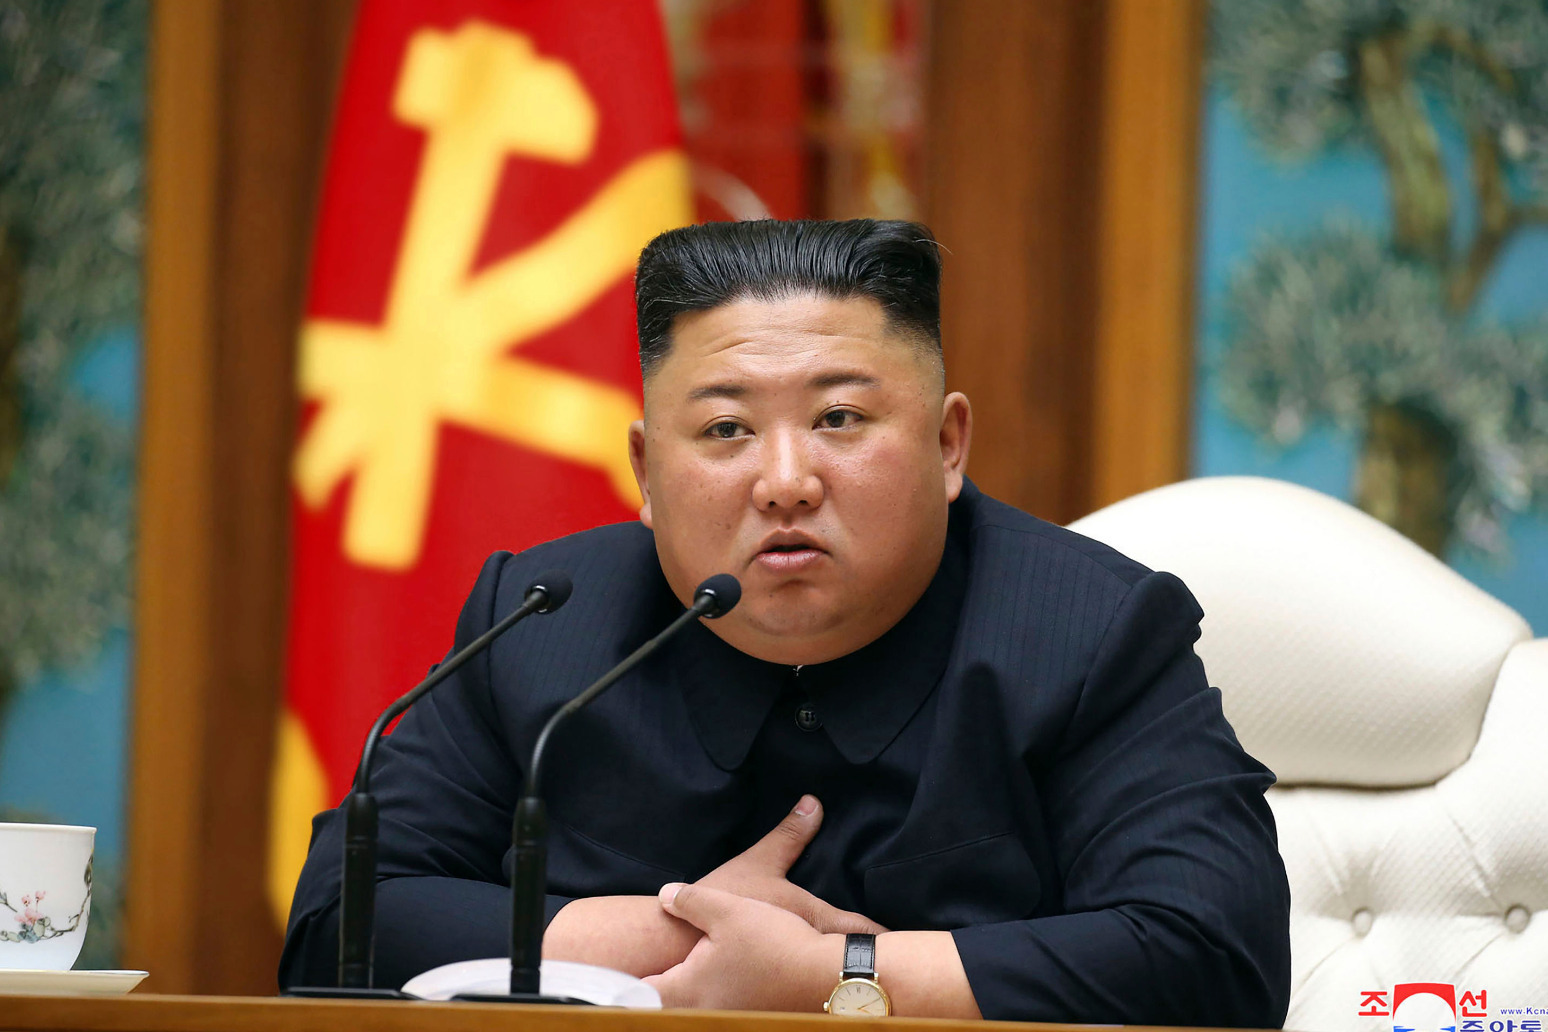 North Korean leader appears in public 